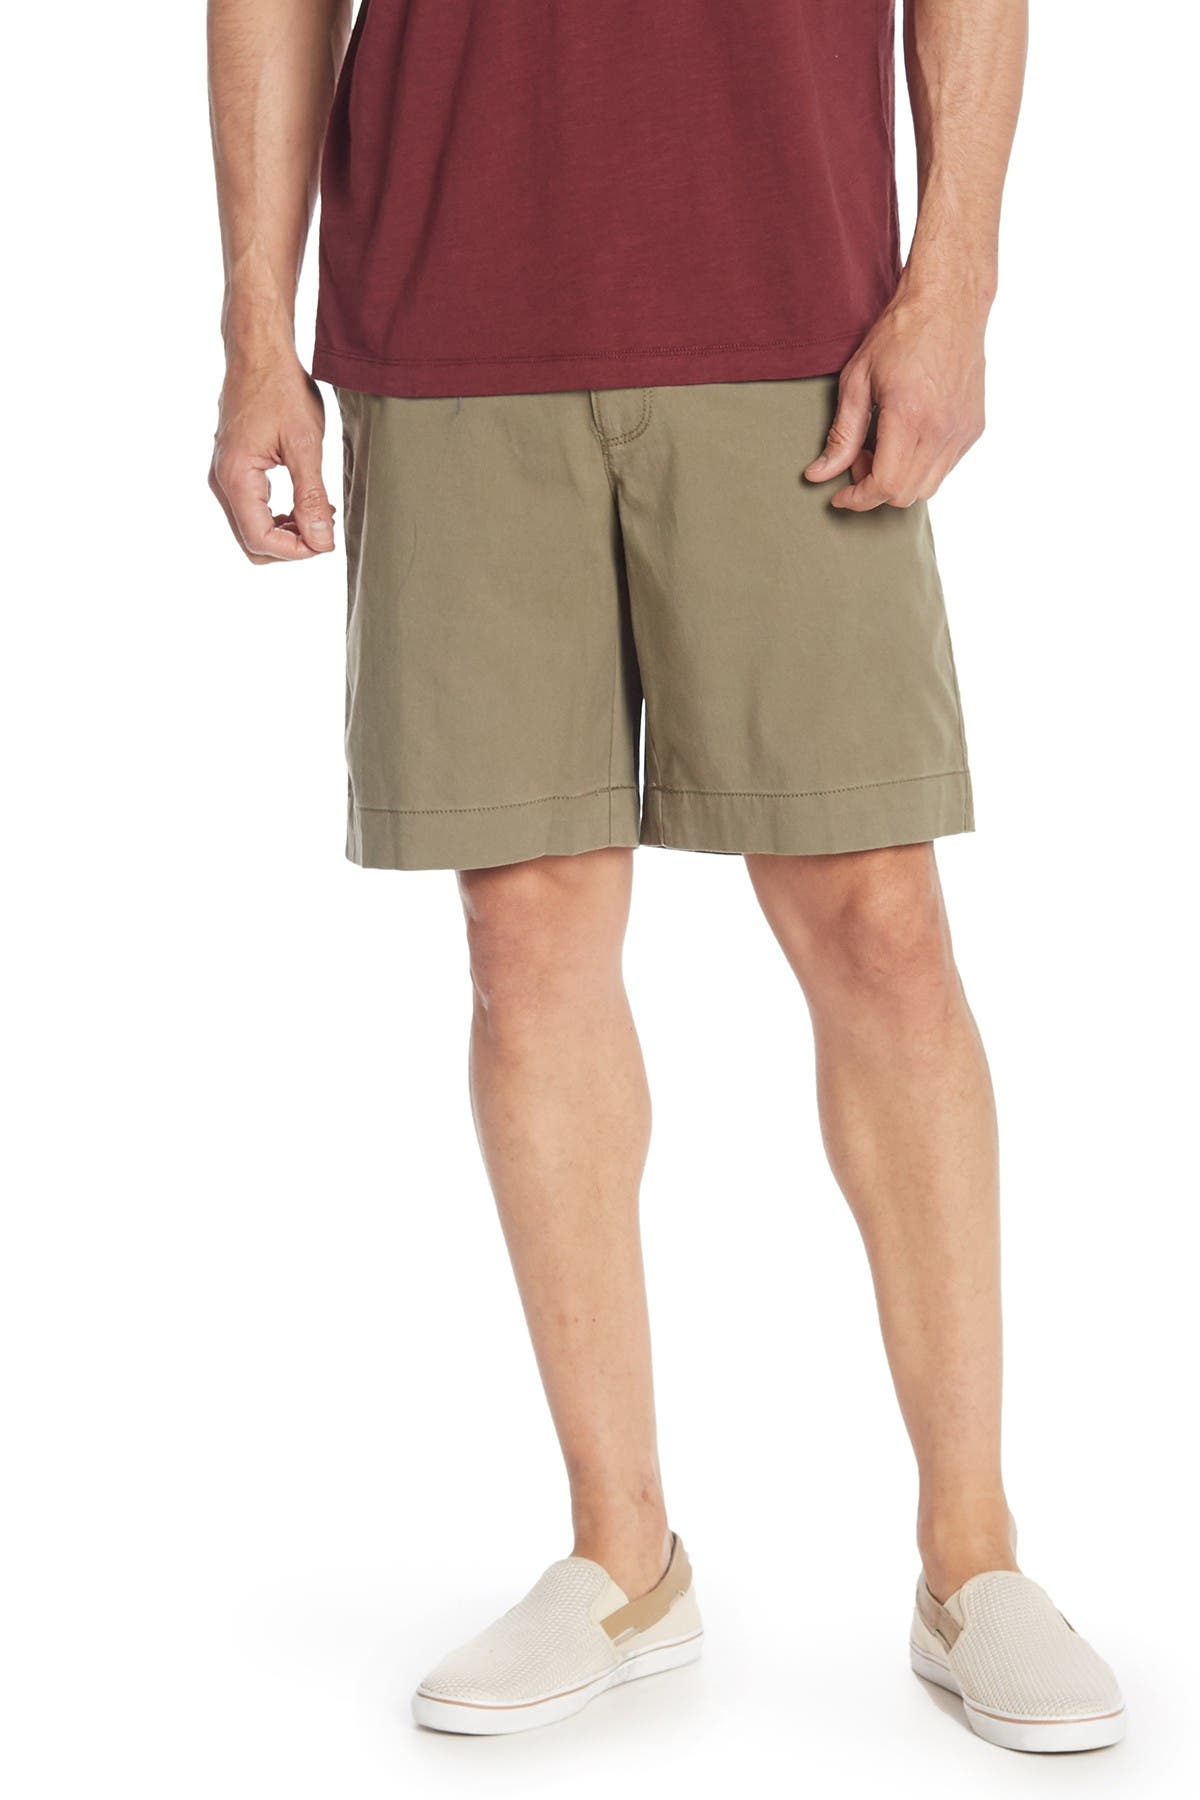 tommy bahama ashore thing shorts